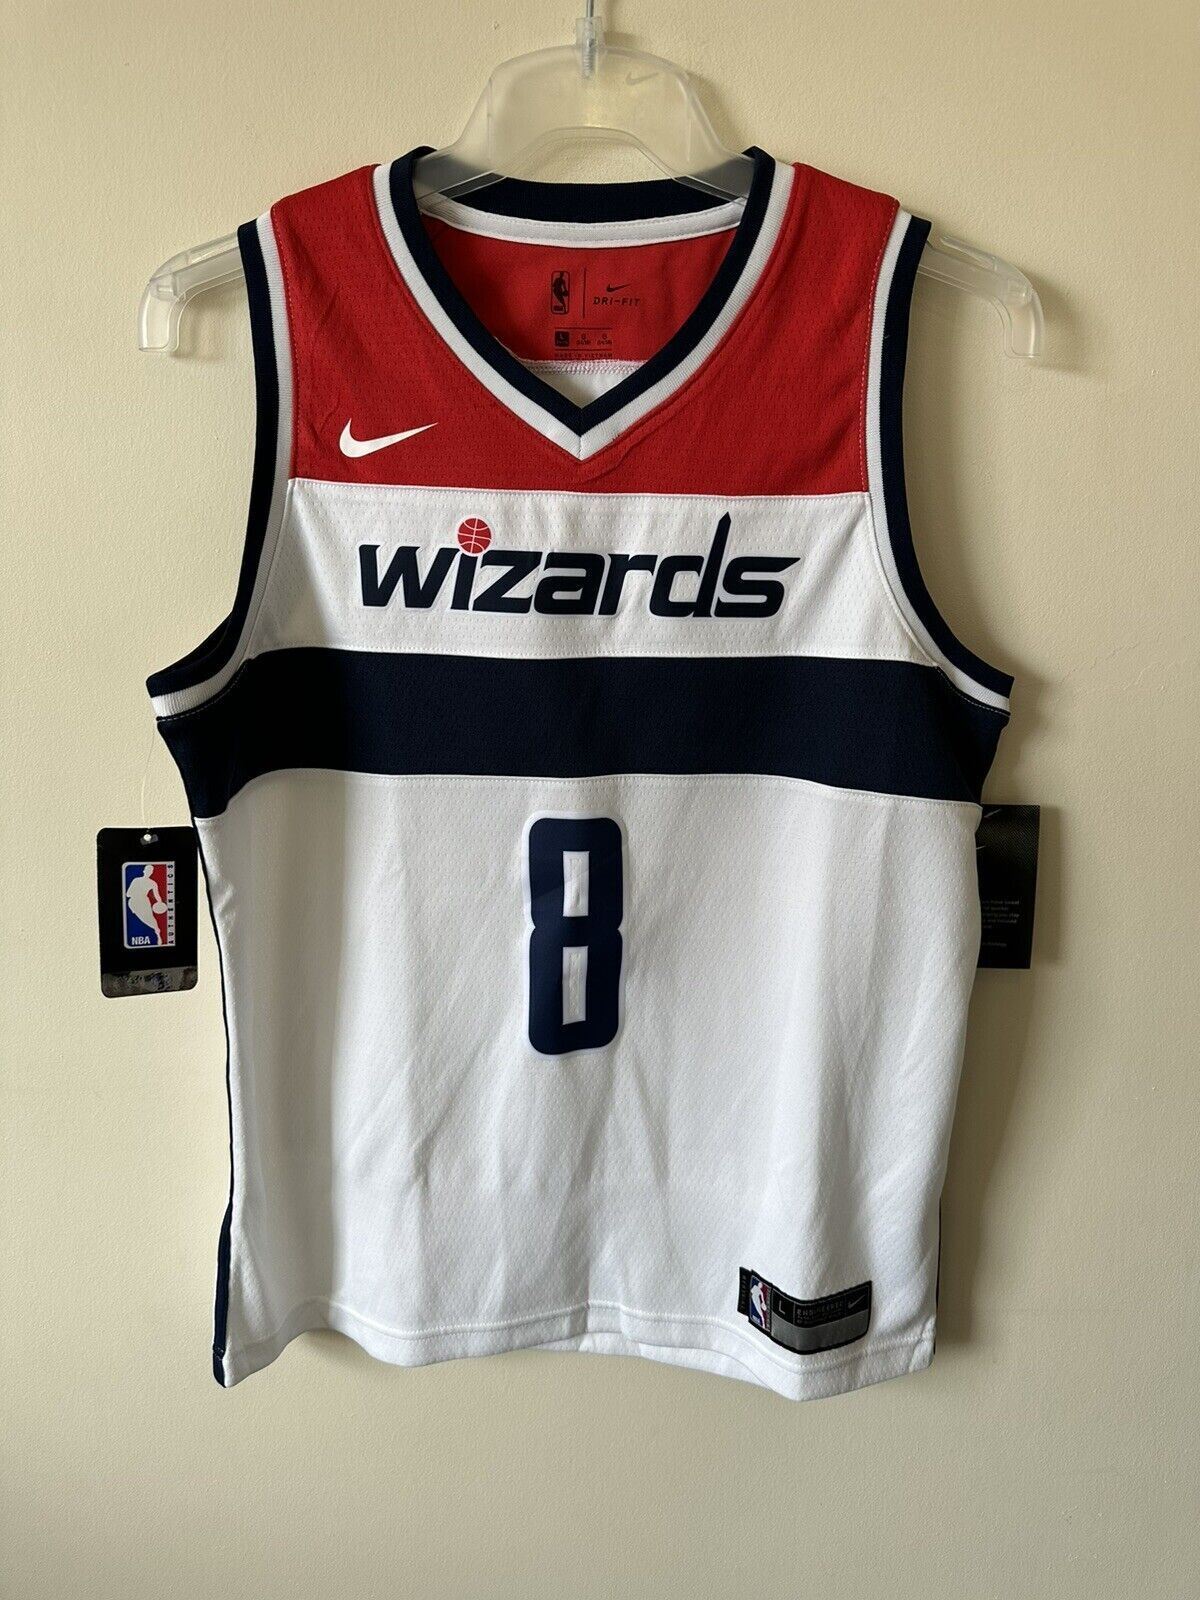 Nike NBA Washington Wizards Swingman Jersey Basketball Youth 12-13 Years